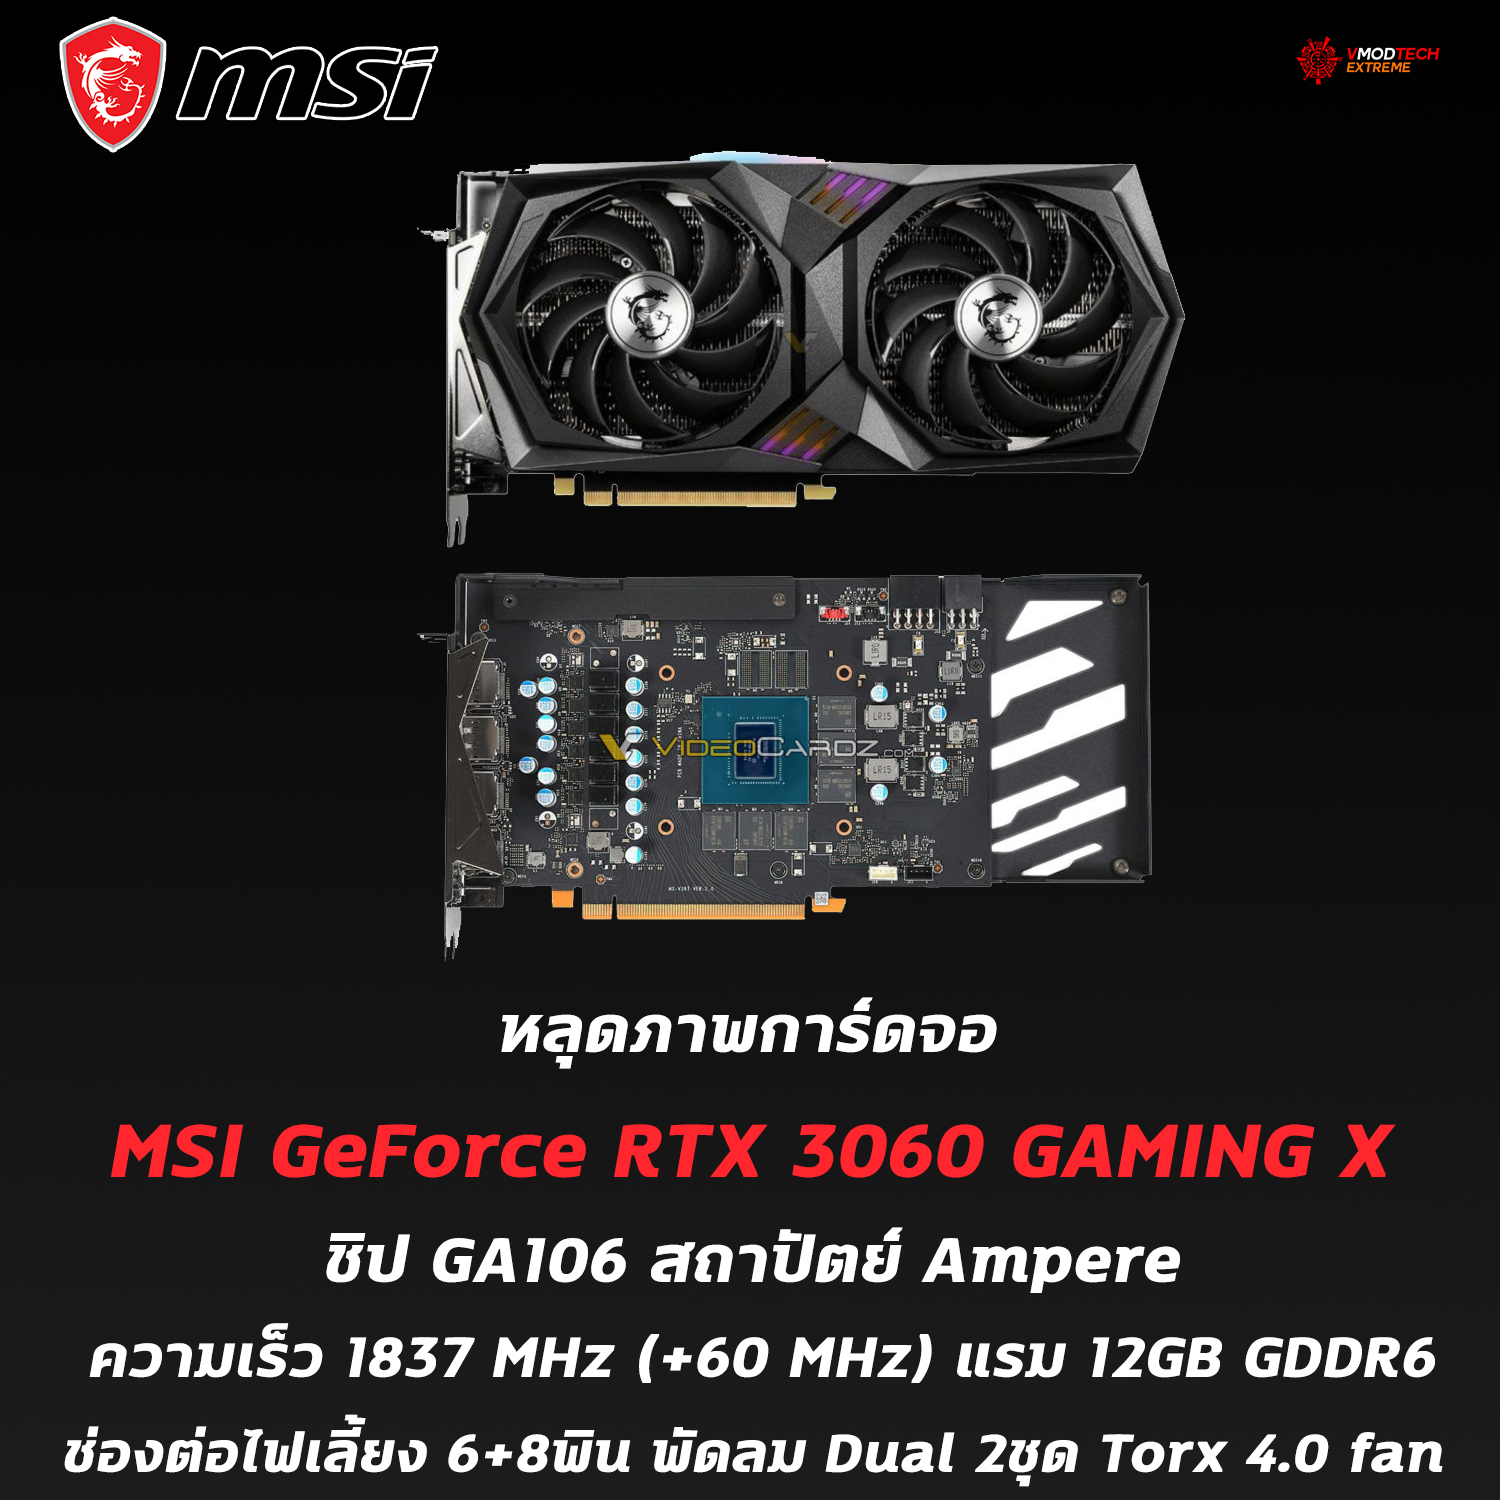 msi geforce rtx 3060 gaming x หลุดภาพการ์ดจอ MSI GeForce RTX 3060 GAMING X เผยให้เห็นชิป GA106 สถาปัตย์ Ampere และภาพ PCB ด้านใน